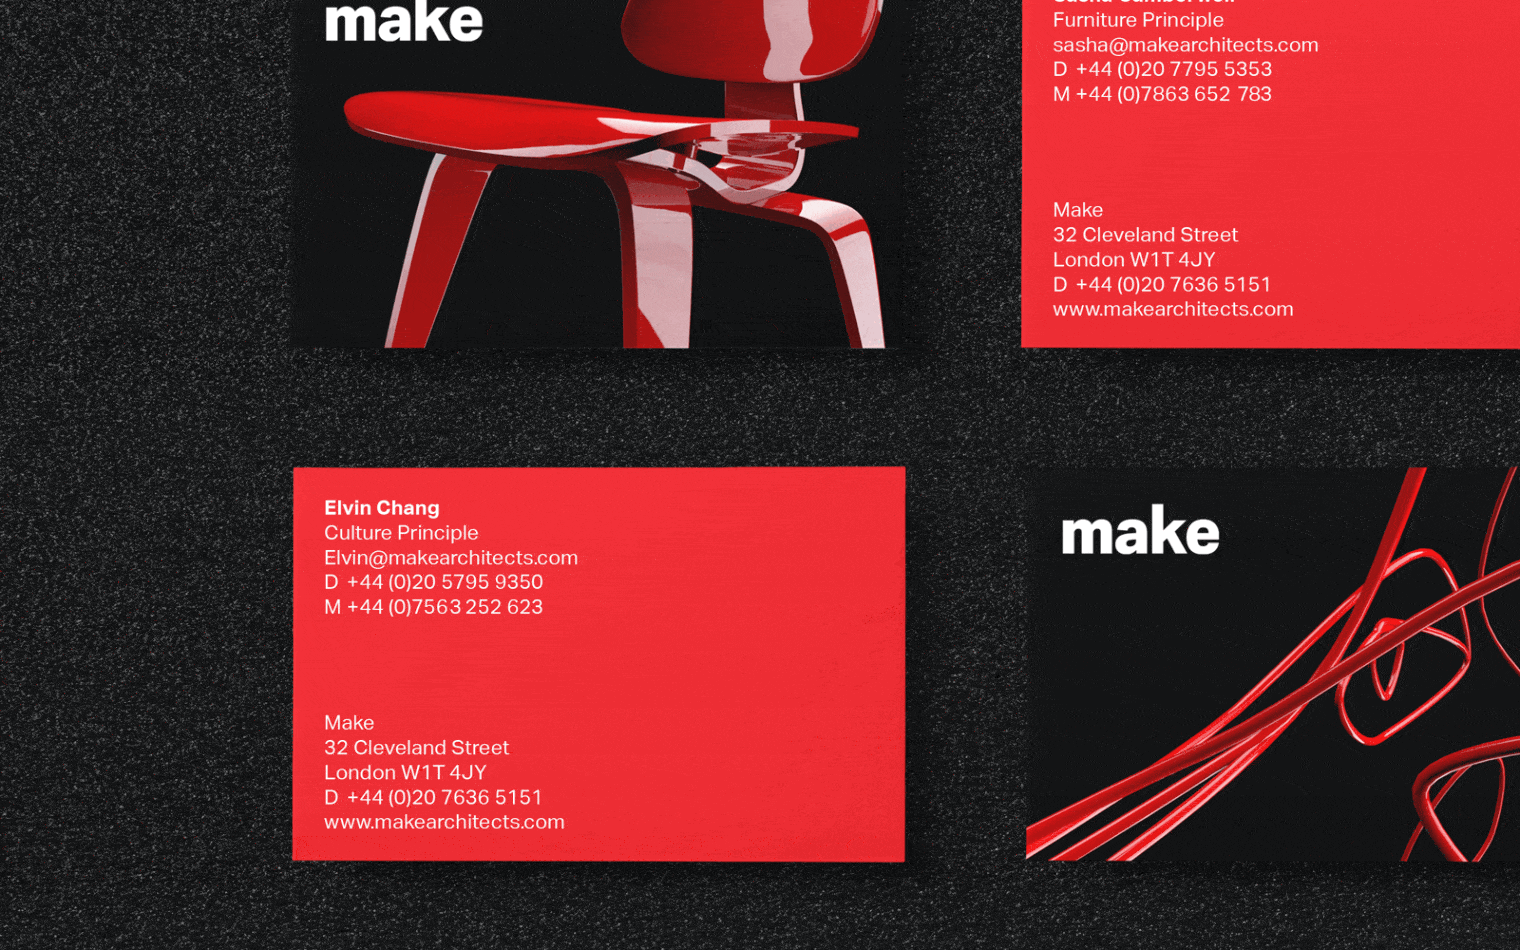 Make Architects | Business Card Design | Steve Edge Design